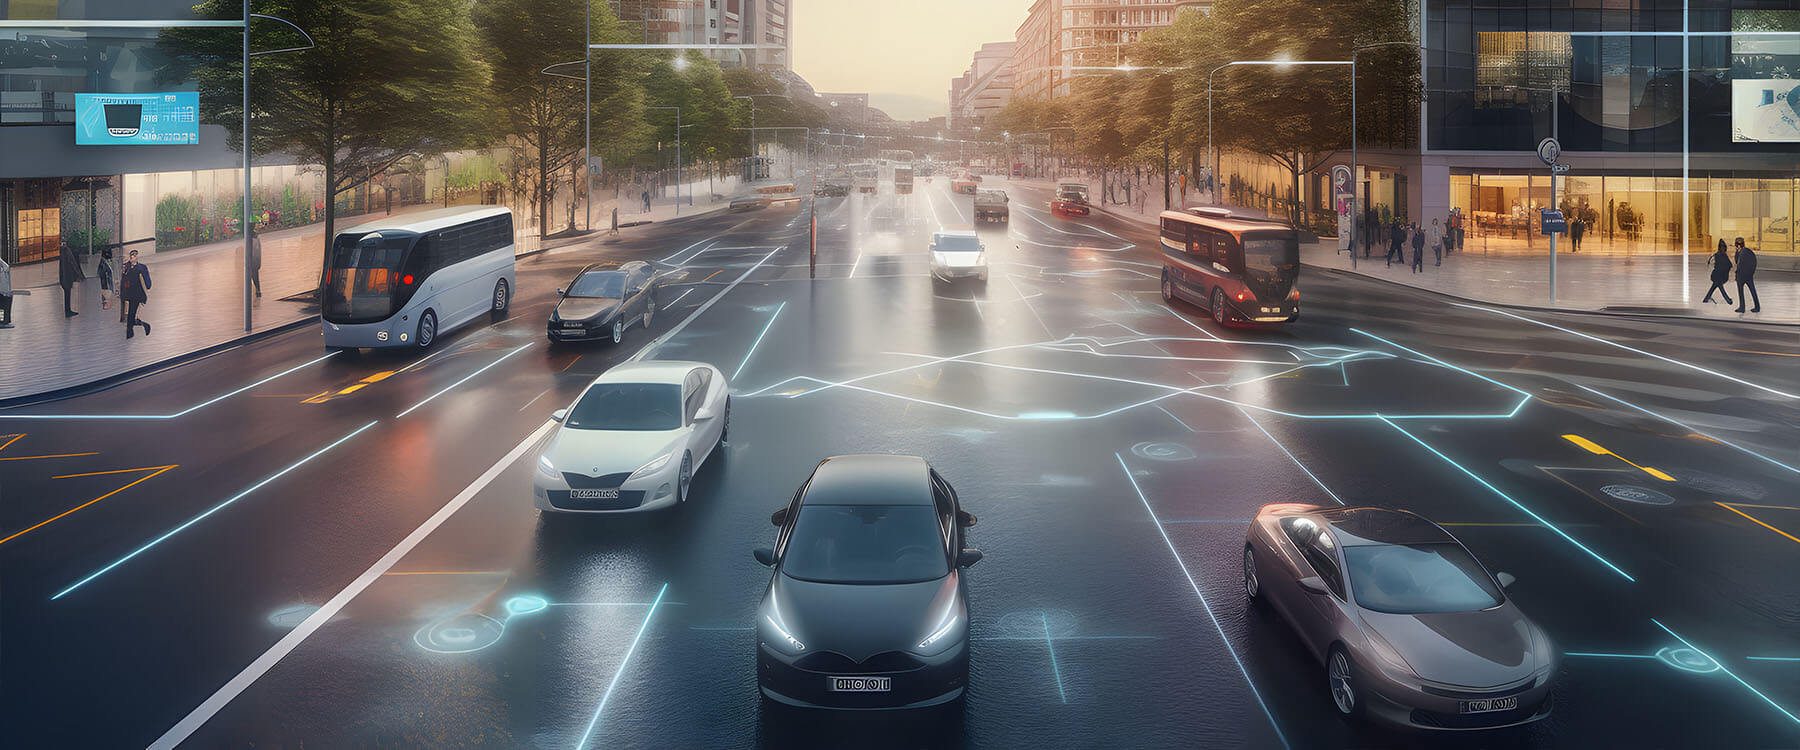 smart traffic security edge AI professional solution NVIDIA Smartcow PNY